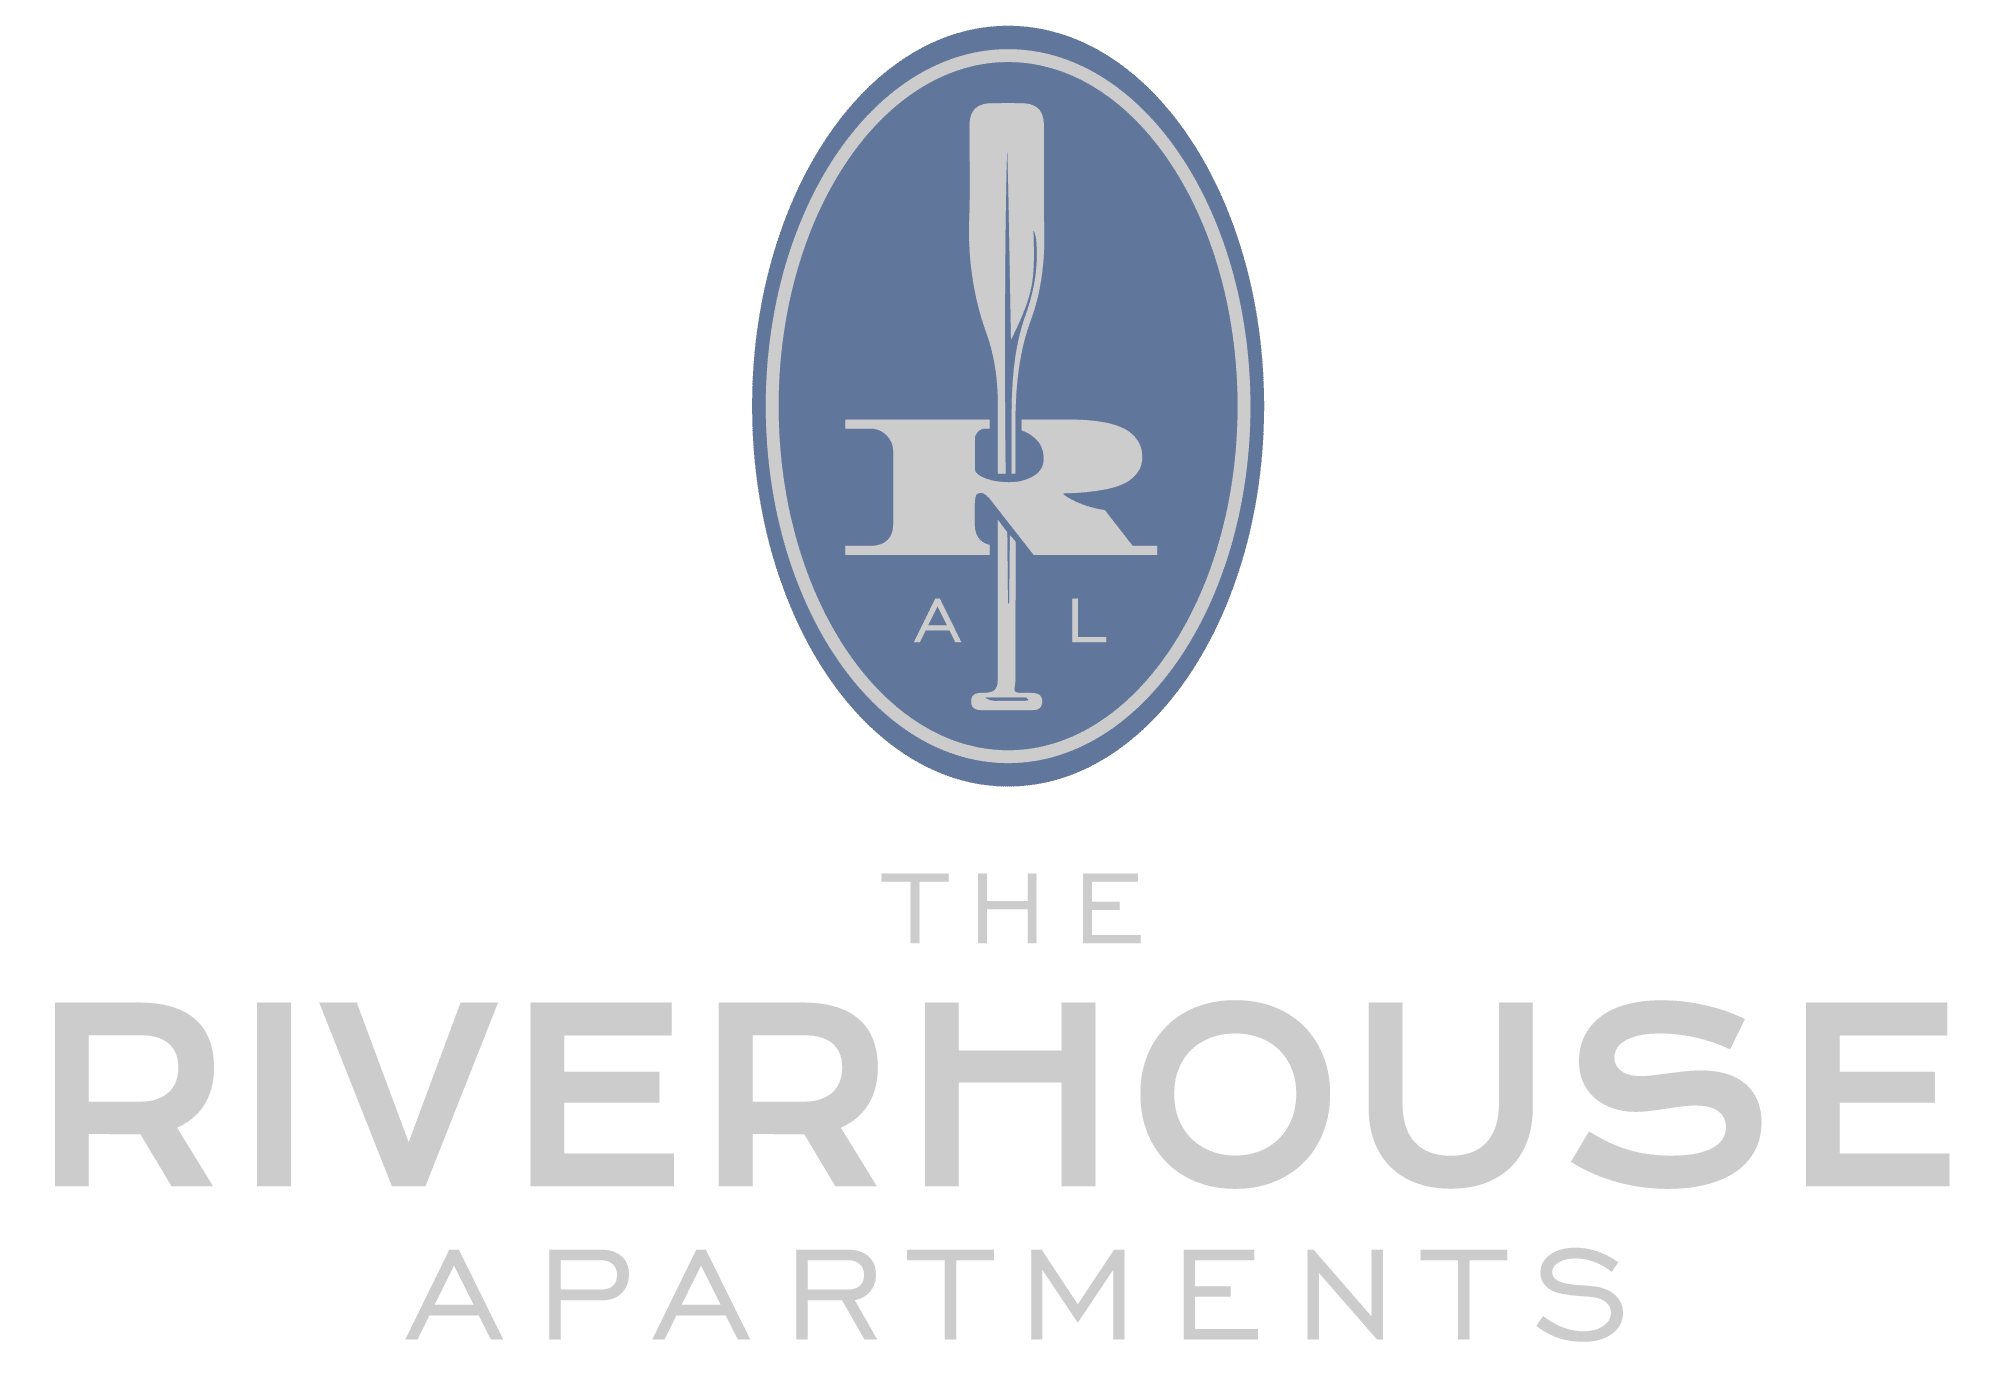 The RiverHouse Apartments